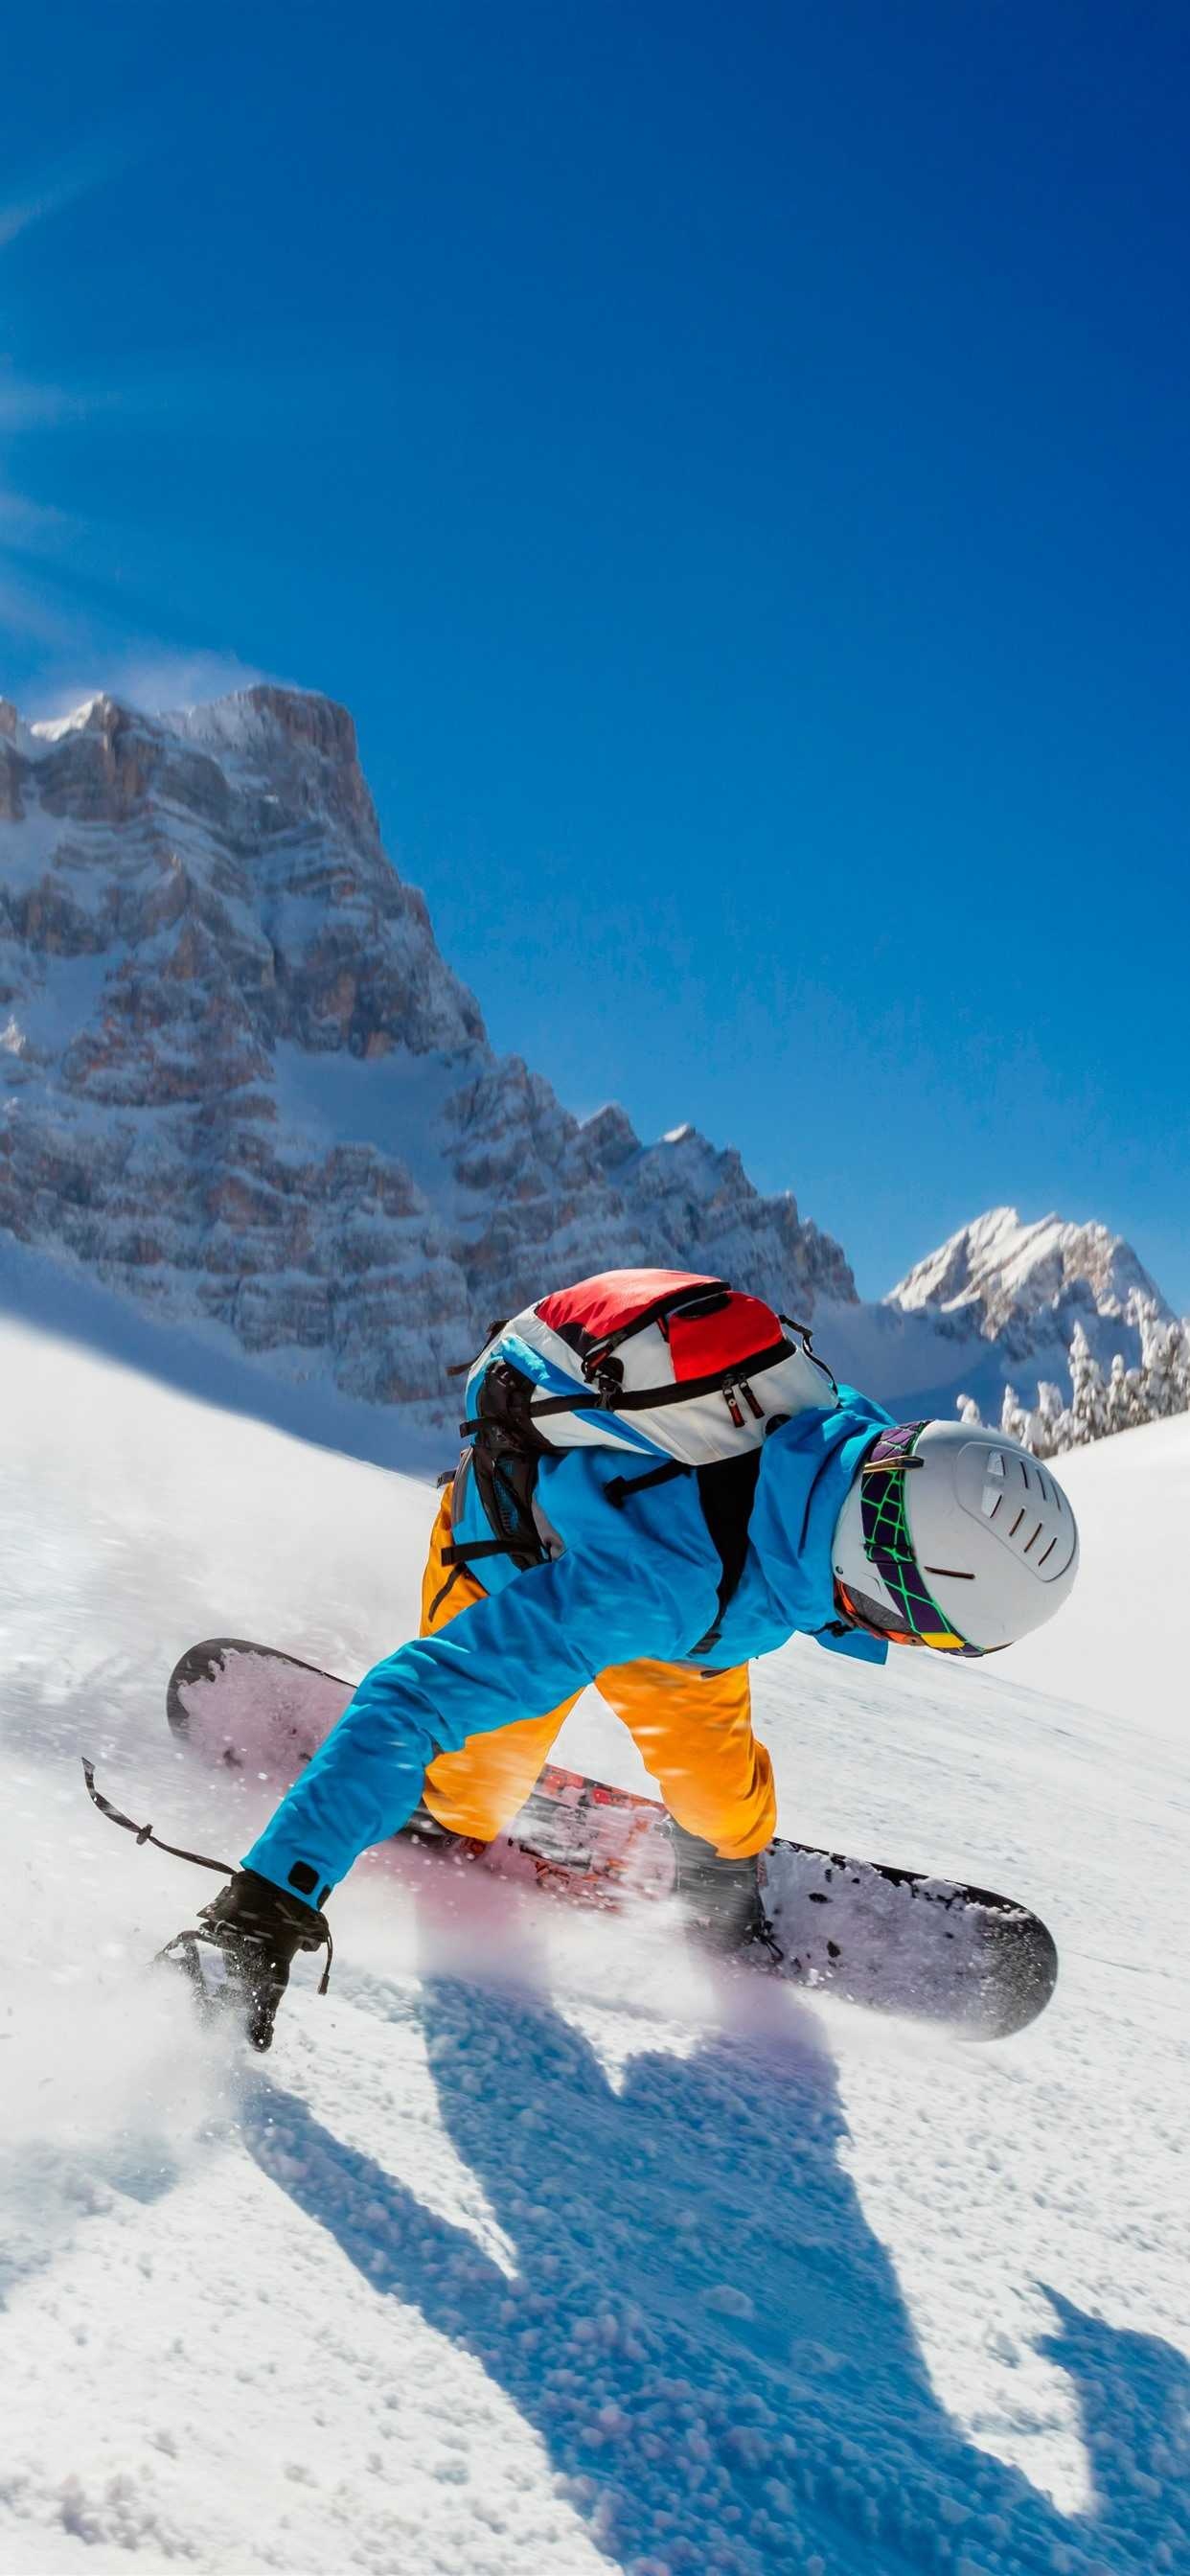 Snowboarding: Alpine snowboarding style, Hard packed snow sport discipline. 1250x2690 HD Background.